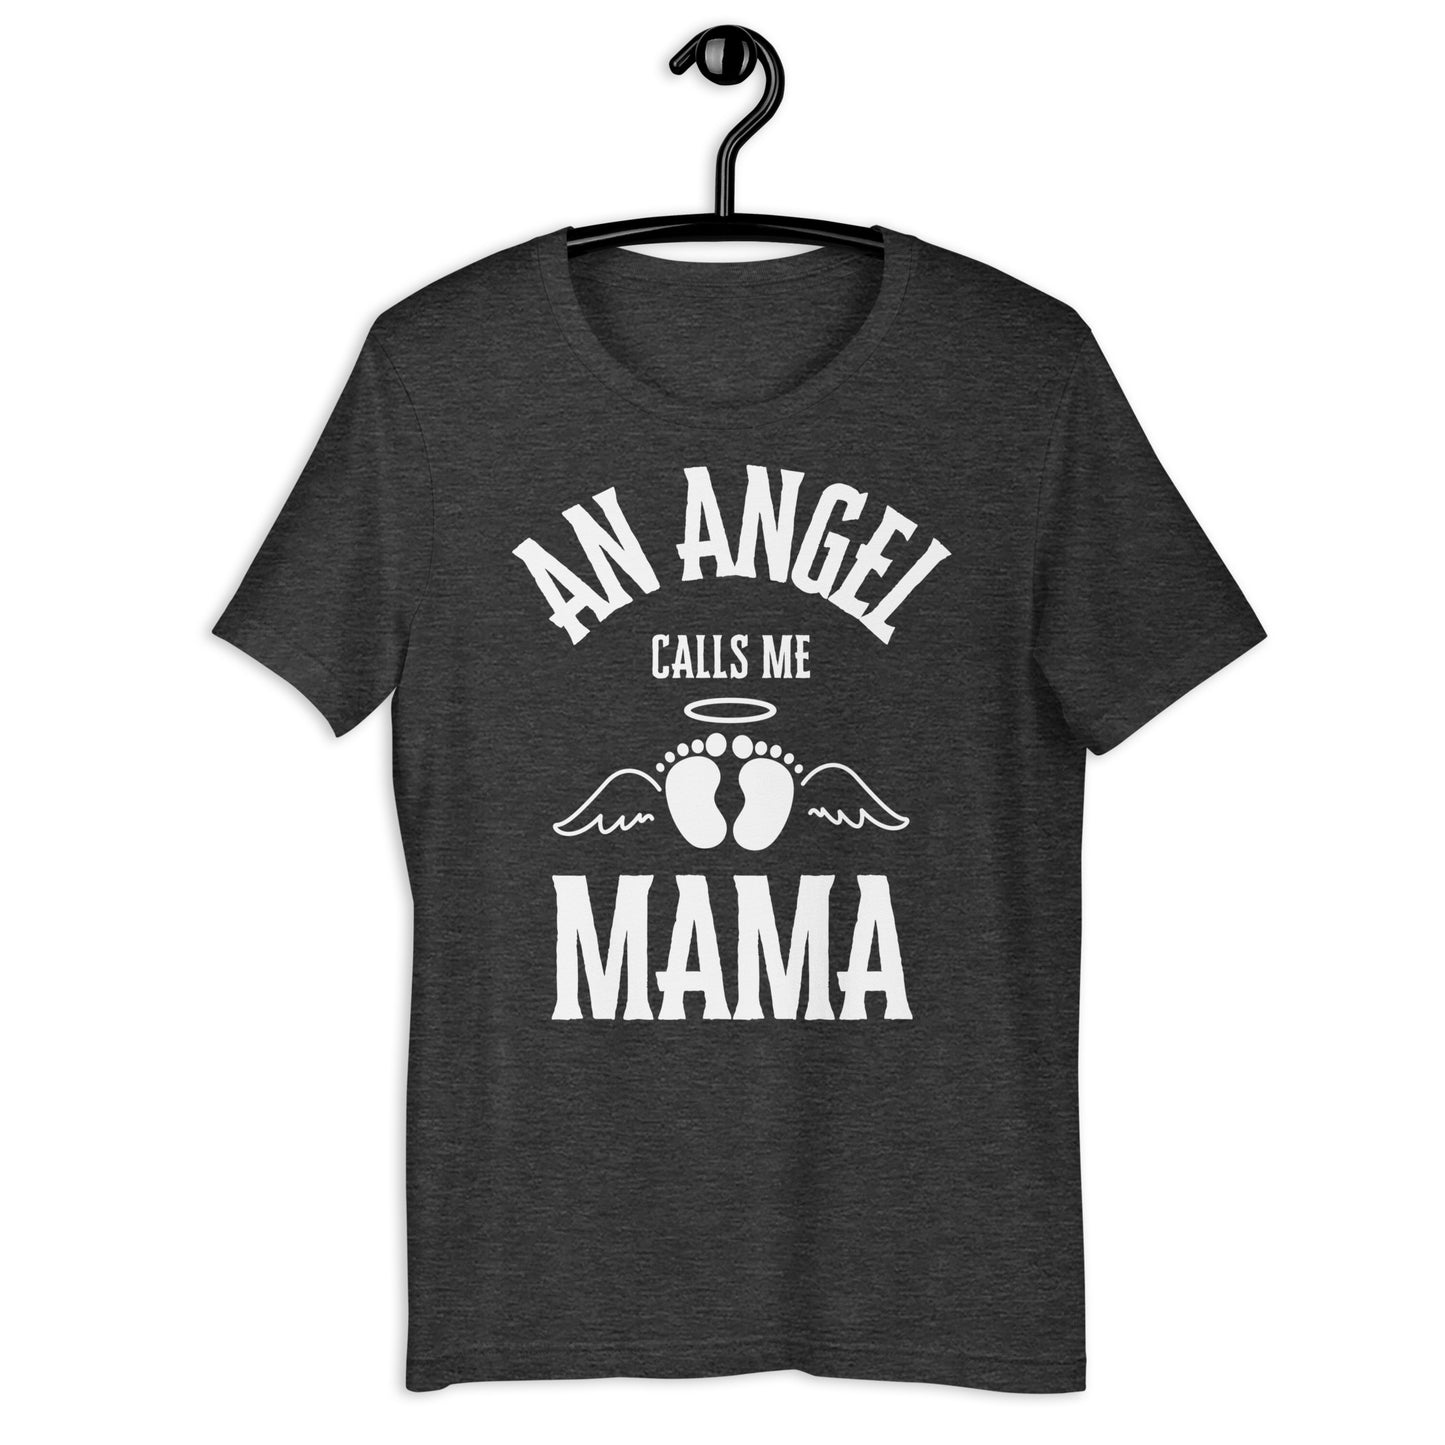 Angel Mom Shirt, Grieve Mother, Memorial Shirt, Infant Loss, Healing from Loss, Pregnancy Loss Unisex t-shirt